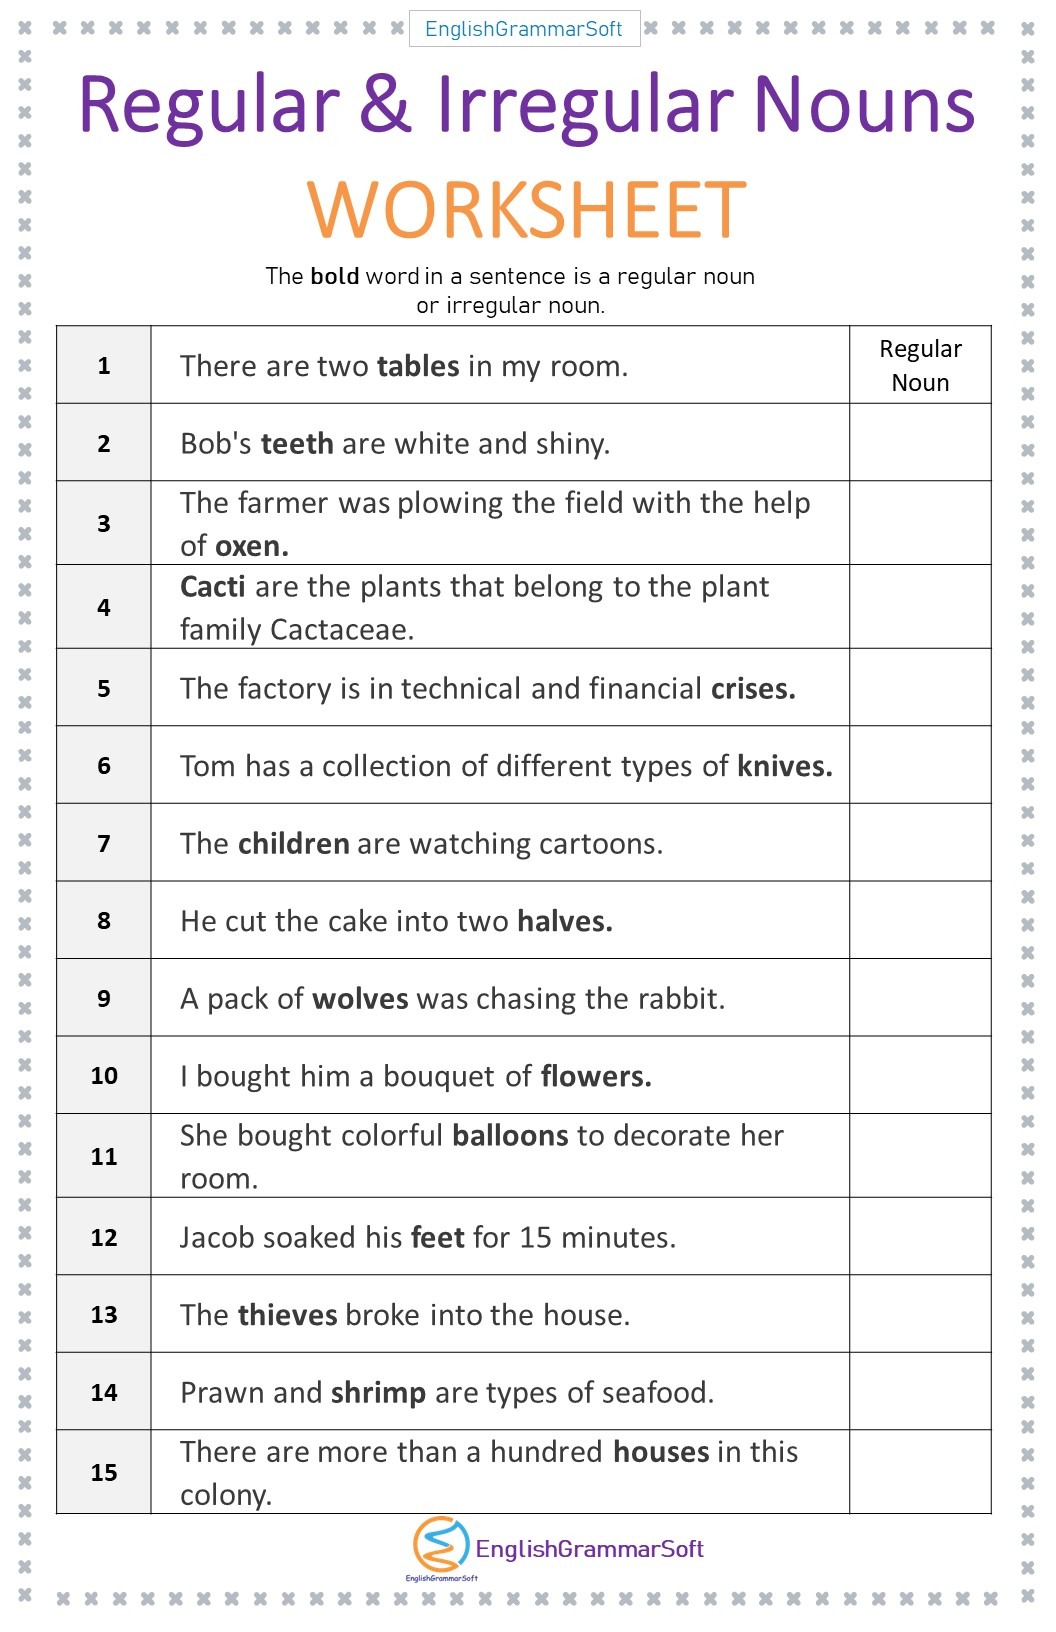 Regular and Irregular Nouns Worksheet